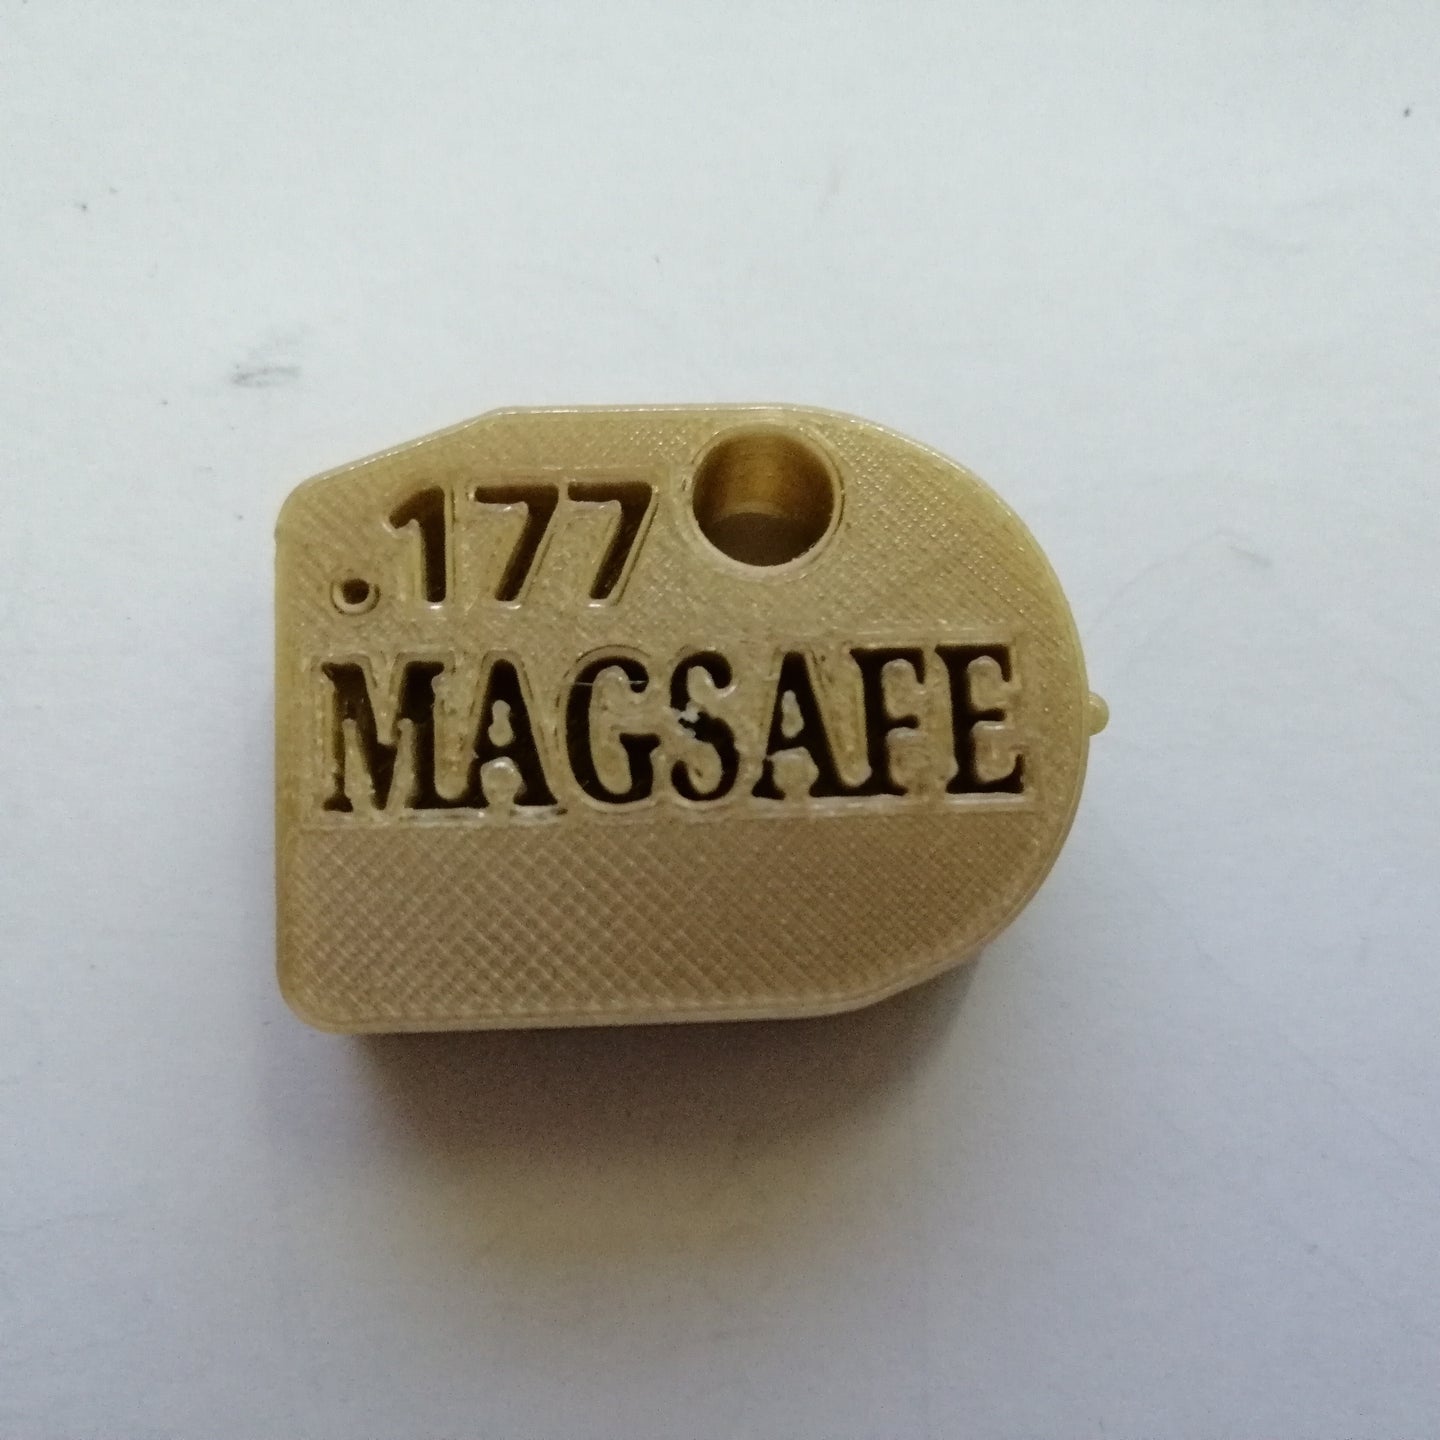 Magsafe BSA & Gamo Phox Air Rifle SAFE Magazine .177 .22